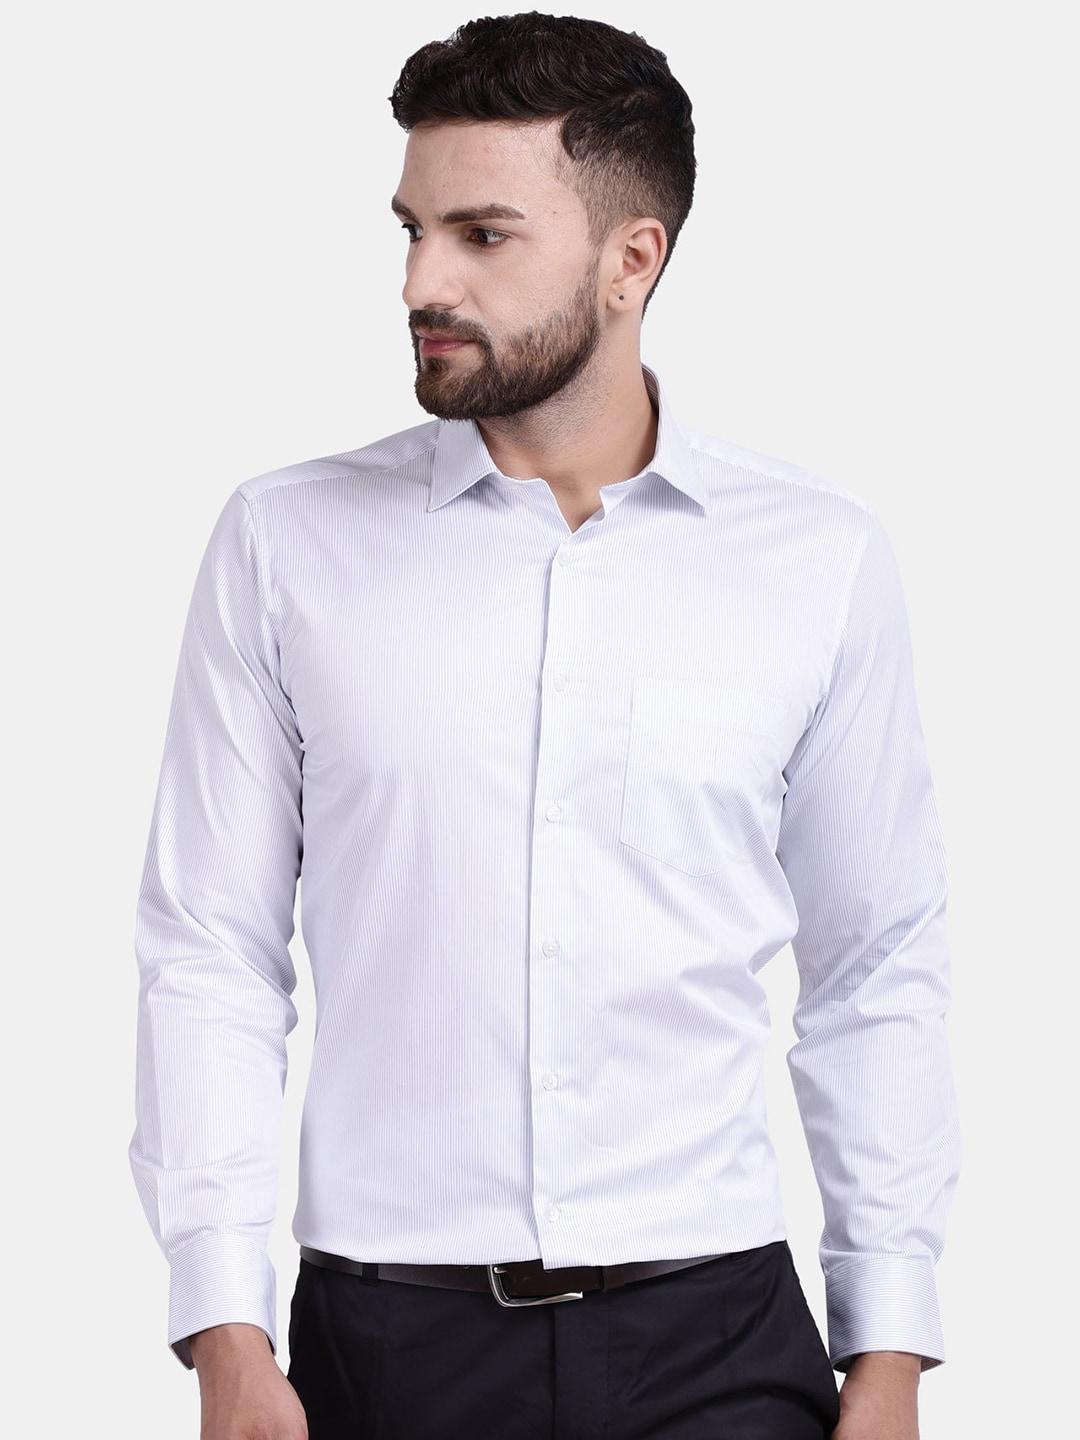 Cotstyle Premium Striped Cotton Formal Shirt